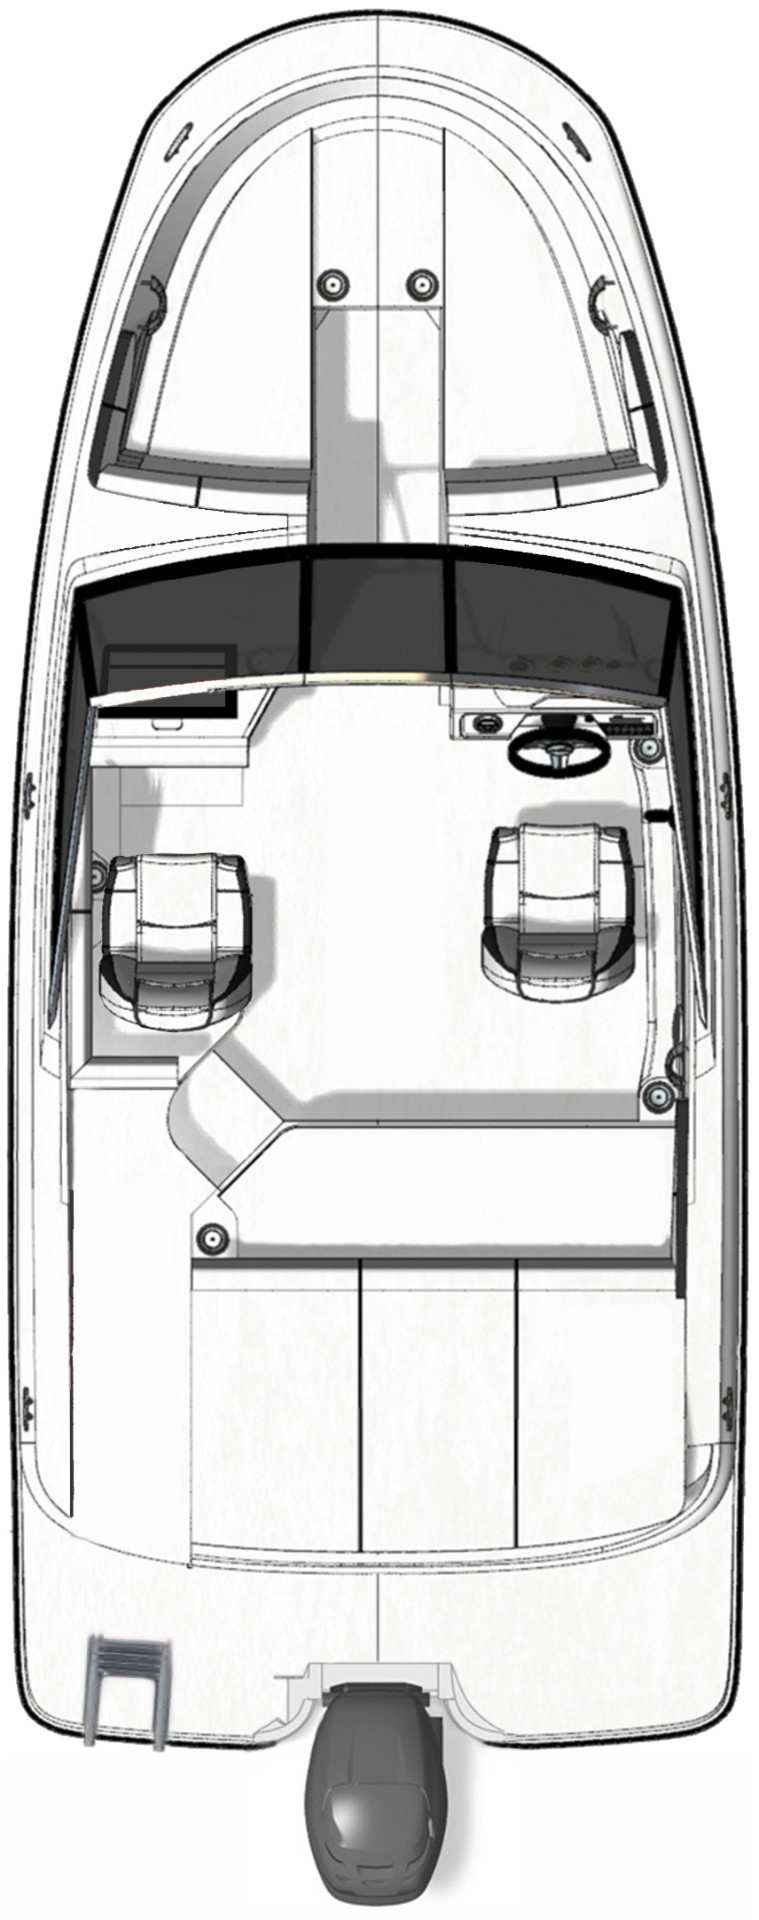 SPX 190 Outboard Option floor plan